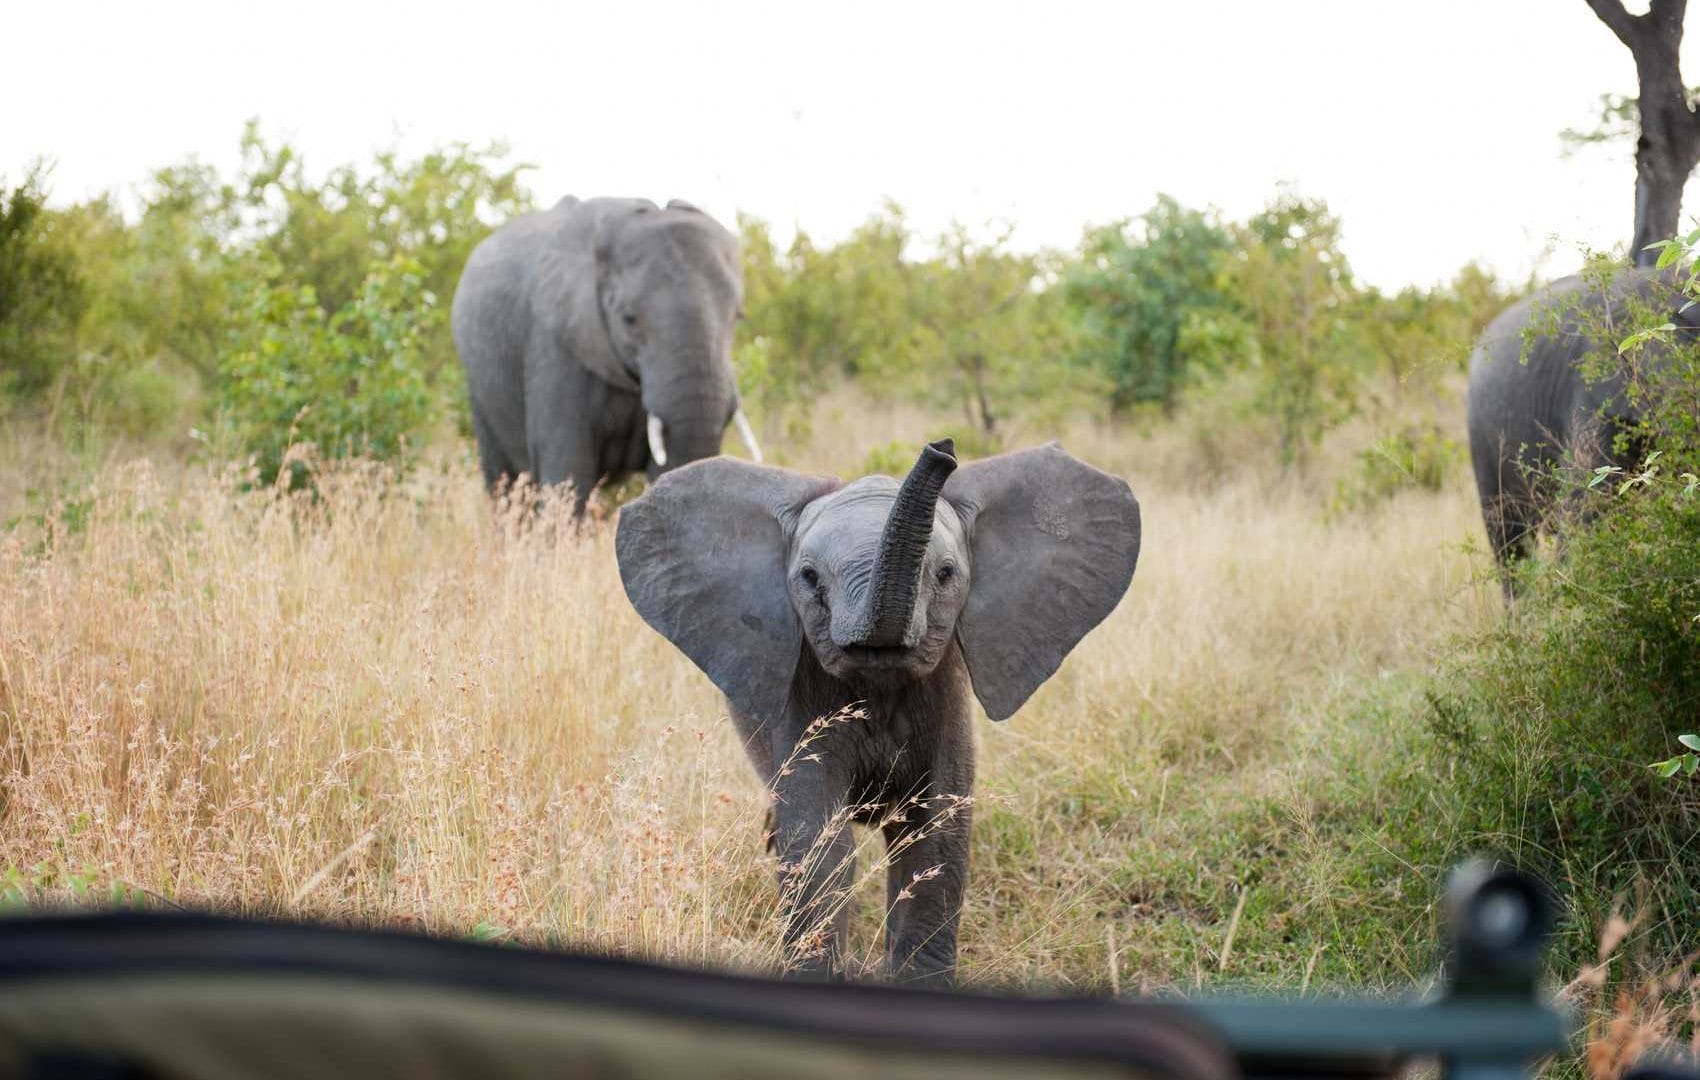 wildlife safari in south africa